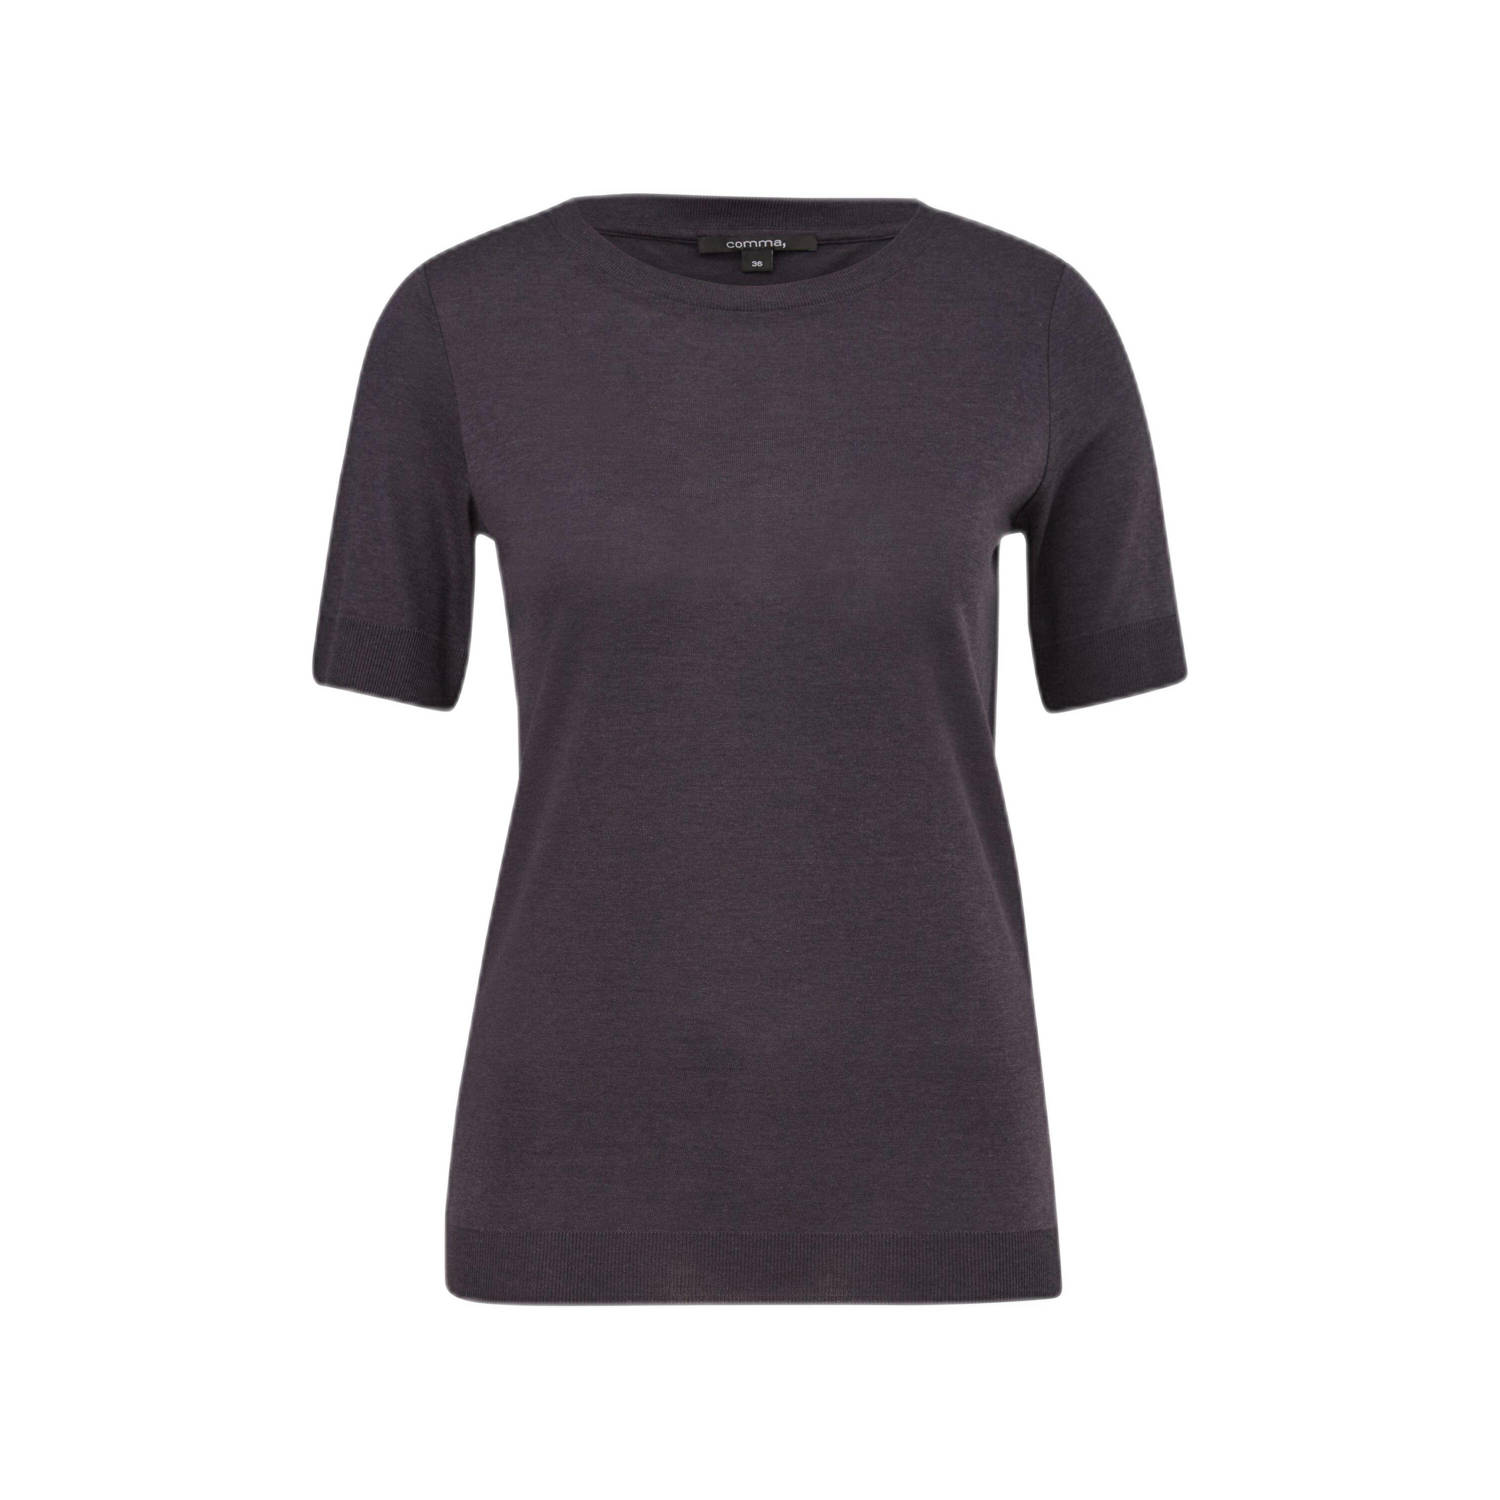 Comma T-shirt grijsblauw